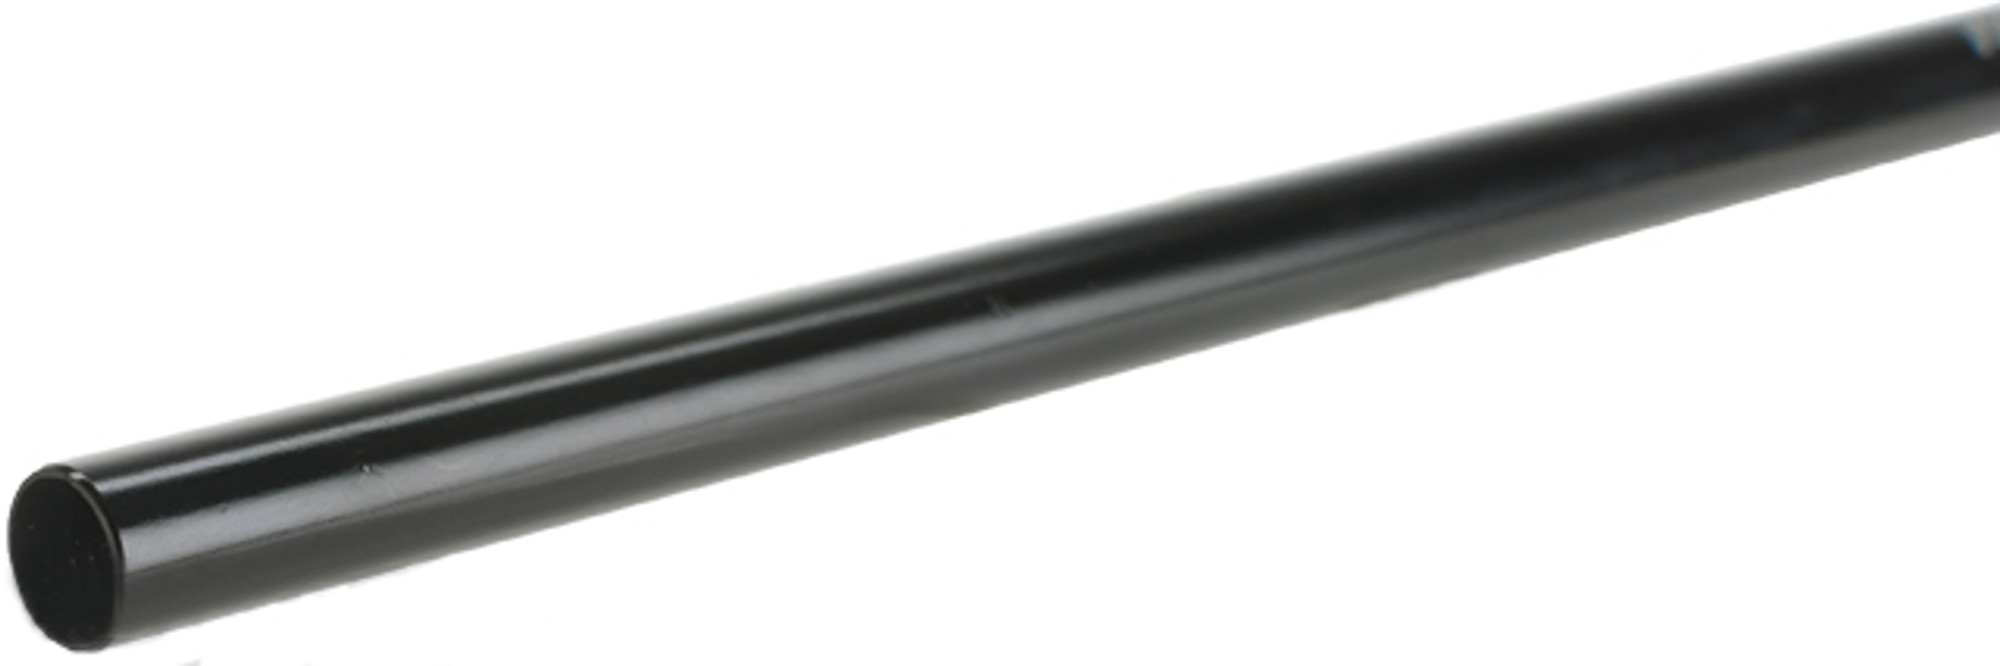 SAT Modified Parts 6.01mm Aluminum Precision Inner Barrel for Tokyo Marui M870 Gas Airsoft Shotguns - 260mm